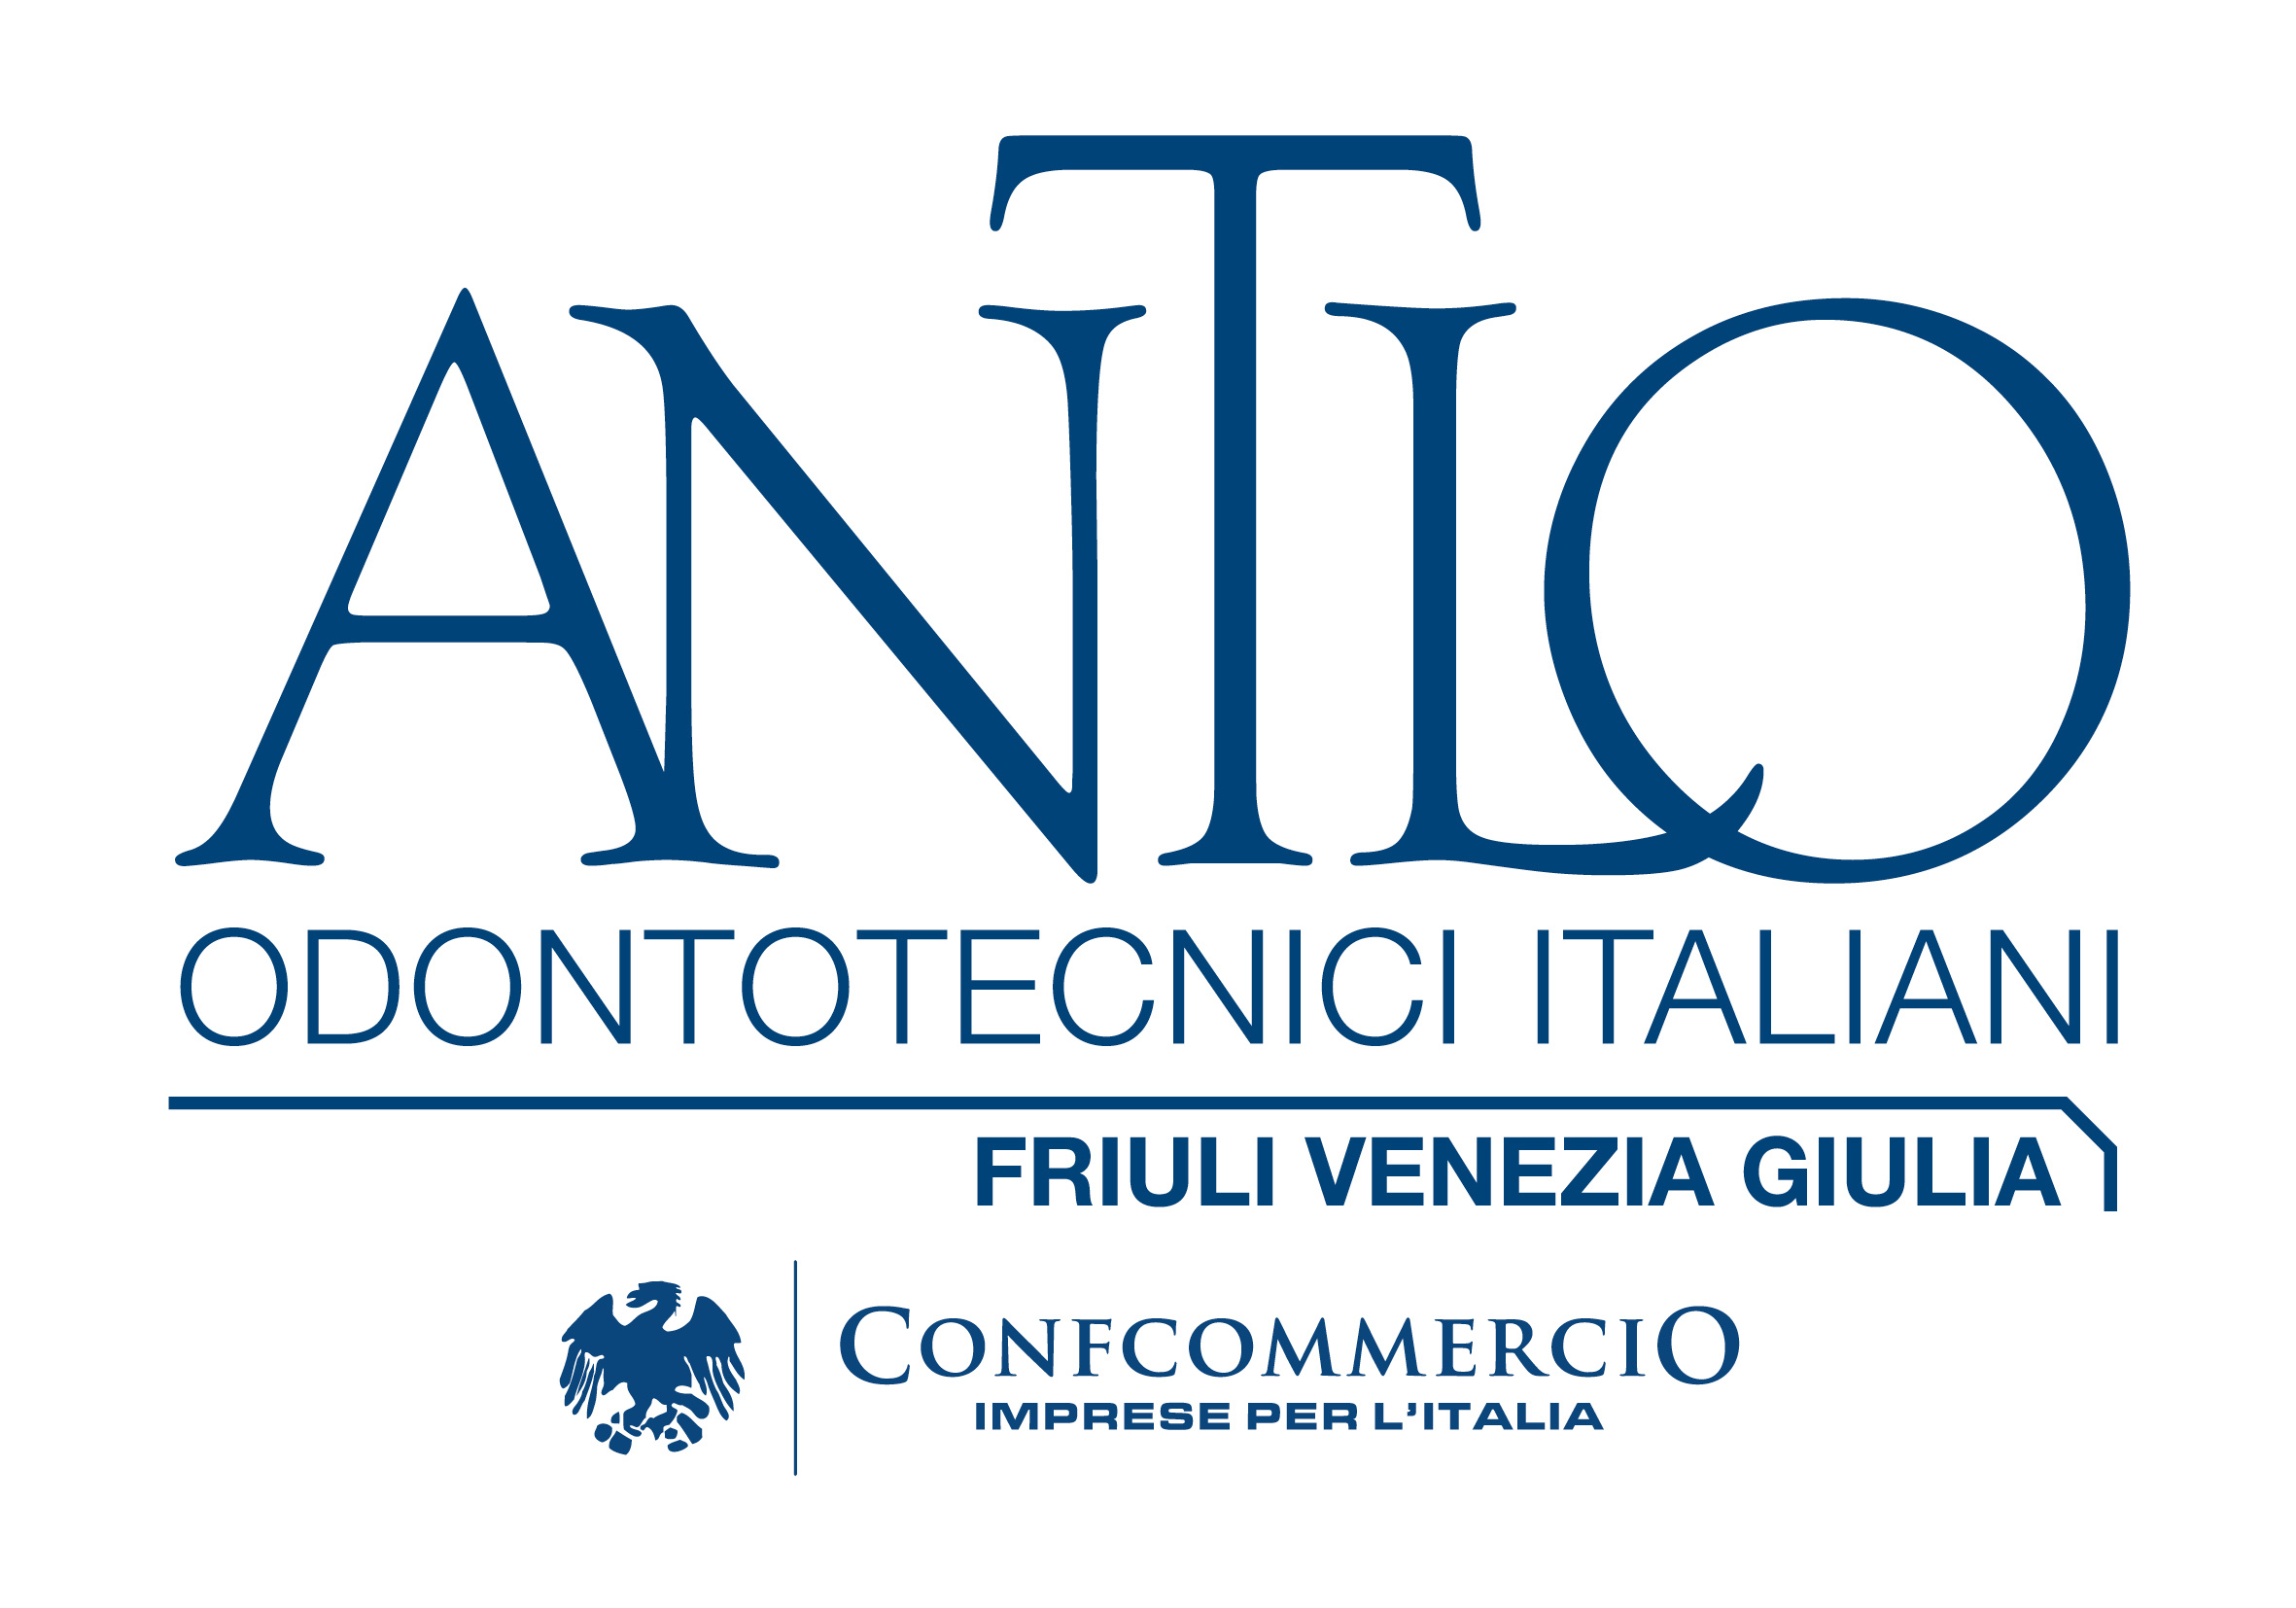 ANTLO Friuli Venezia Giulia